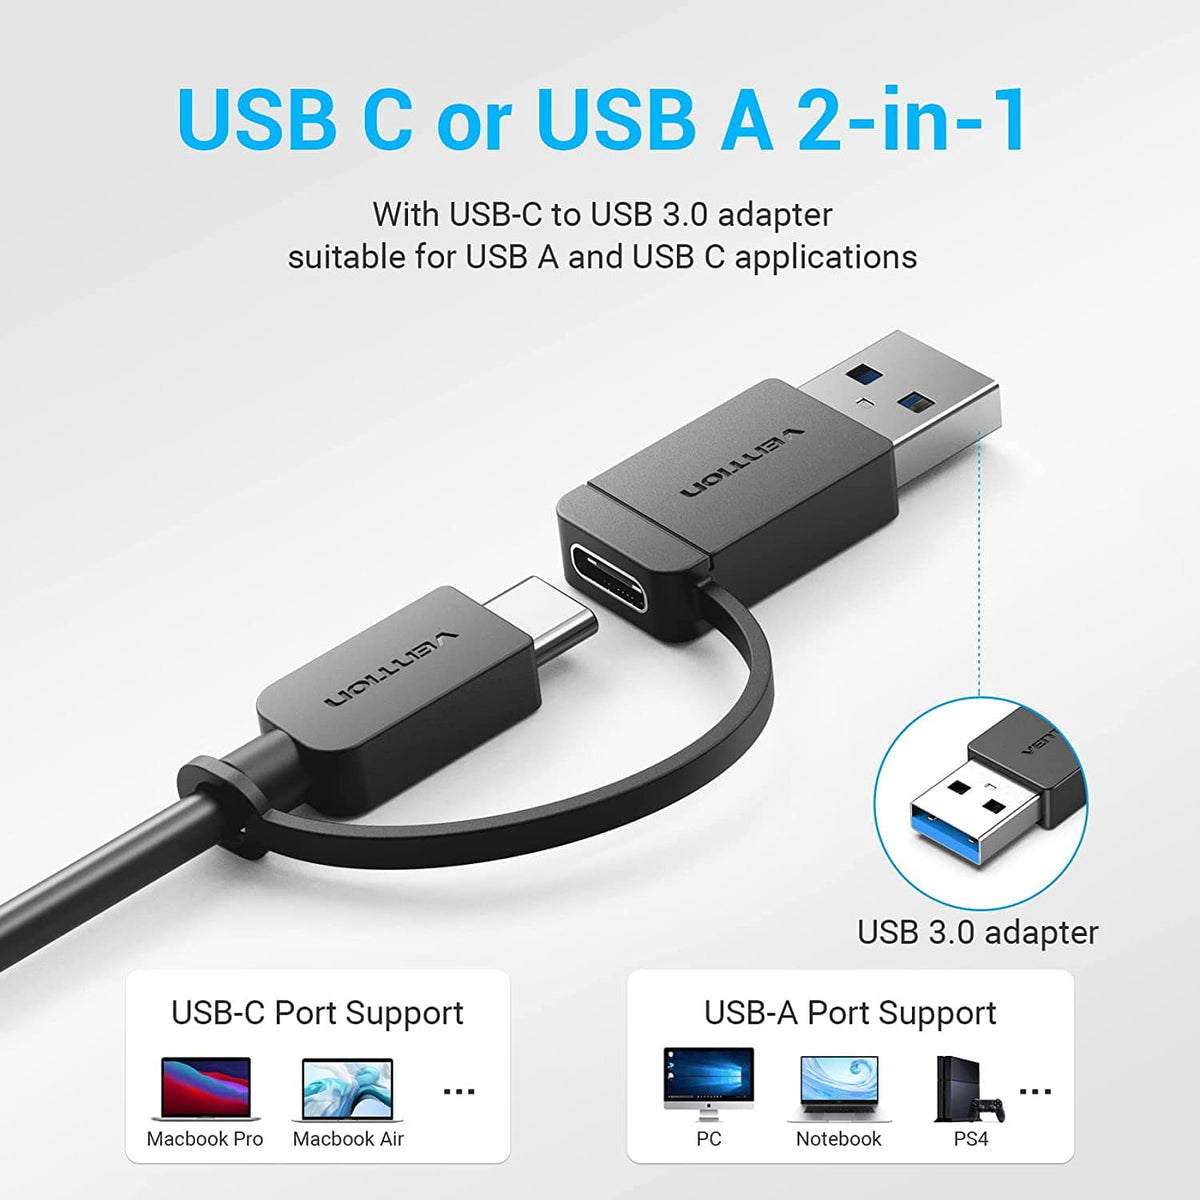 & Type-C 2-in-1 to 4-Port USB 3.0 Hub